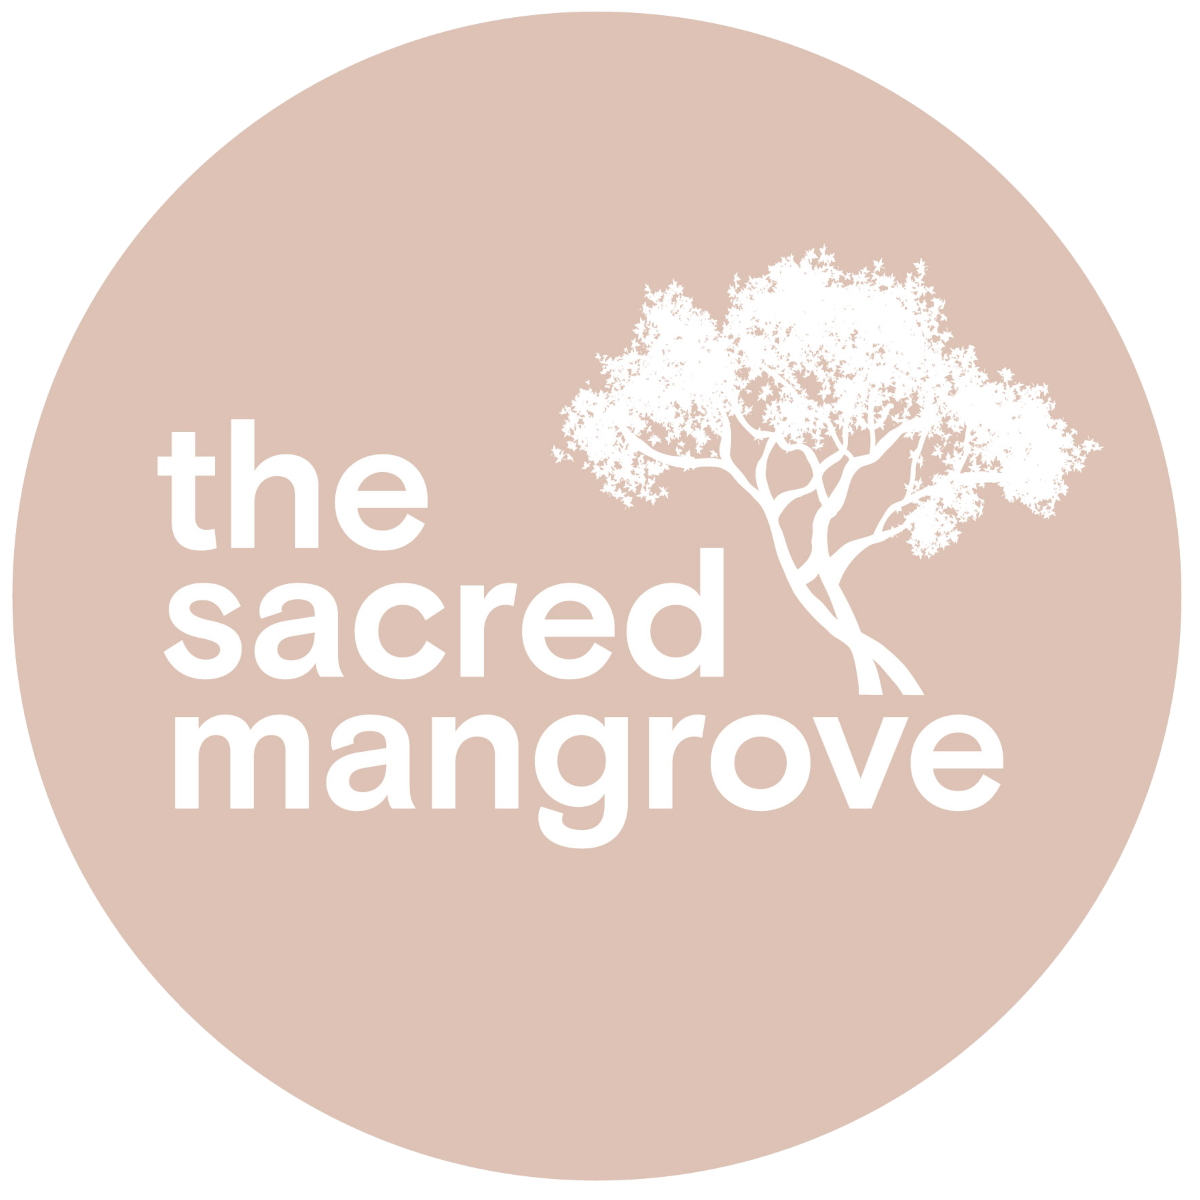 The Sacred Mangrove